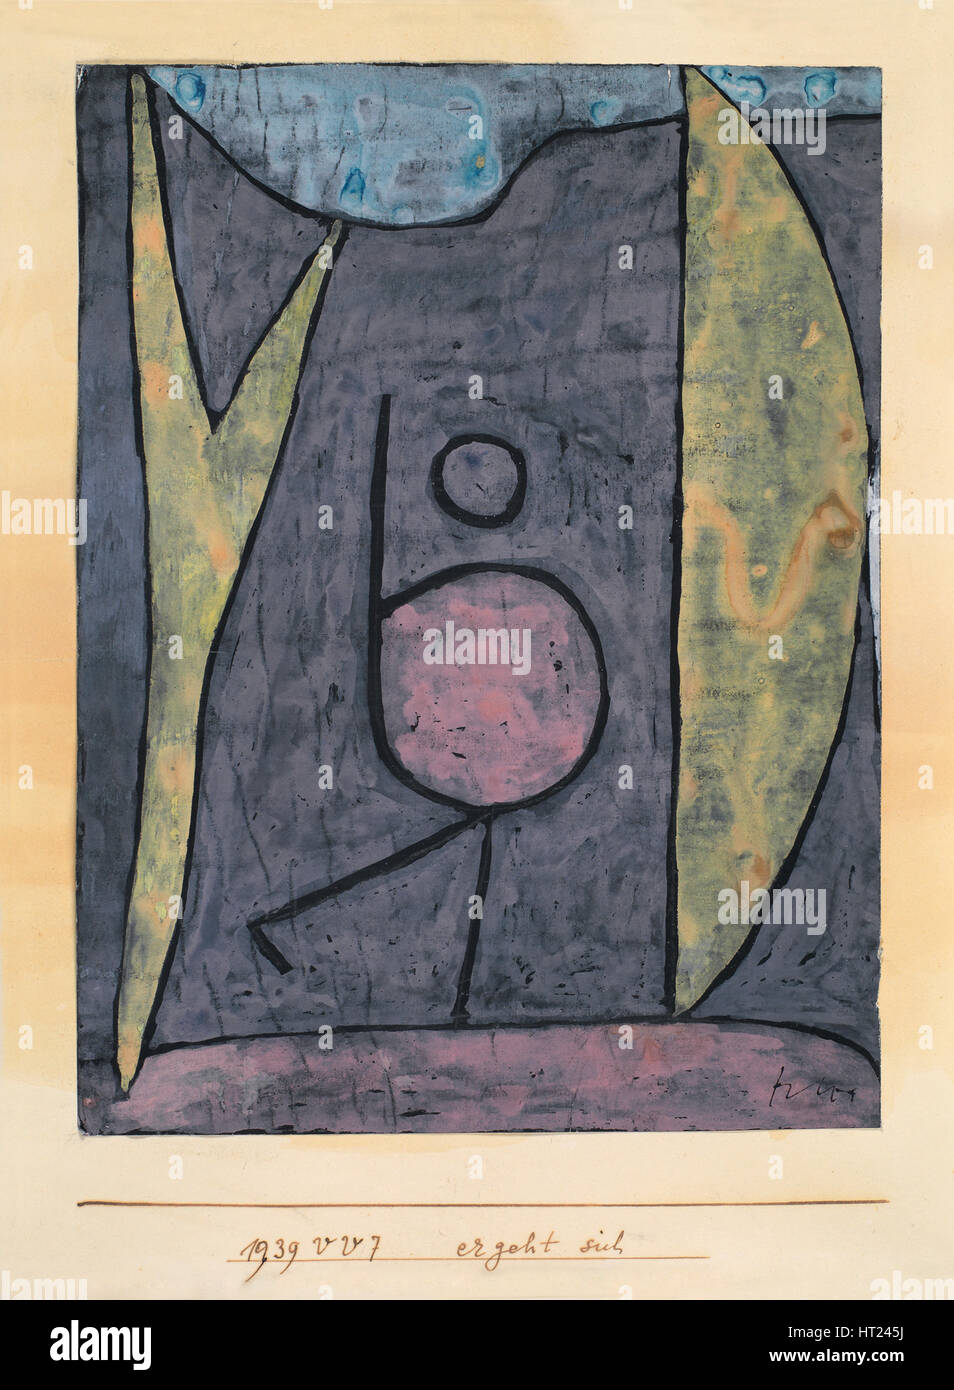 ergeht sich, 1939. Artist: Klee, Paul (1879-1940) Stock Photo